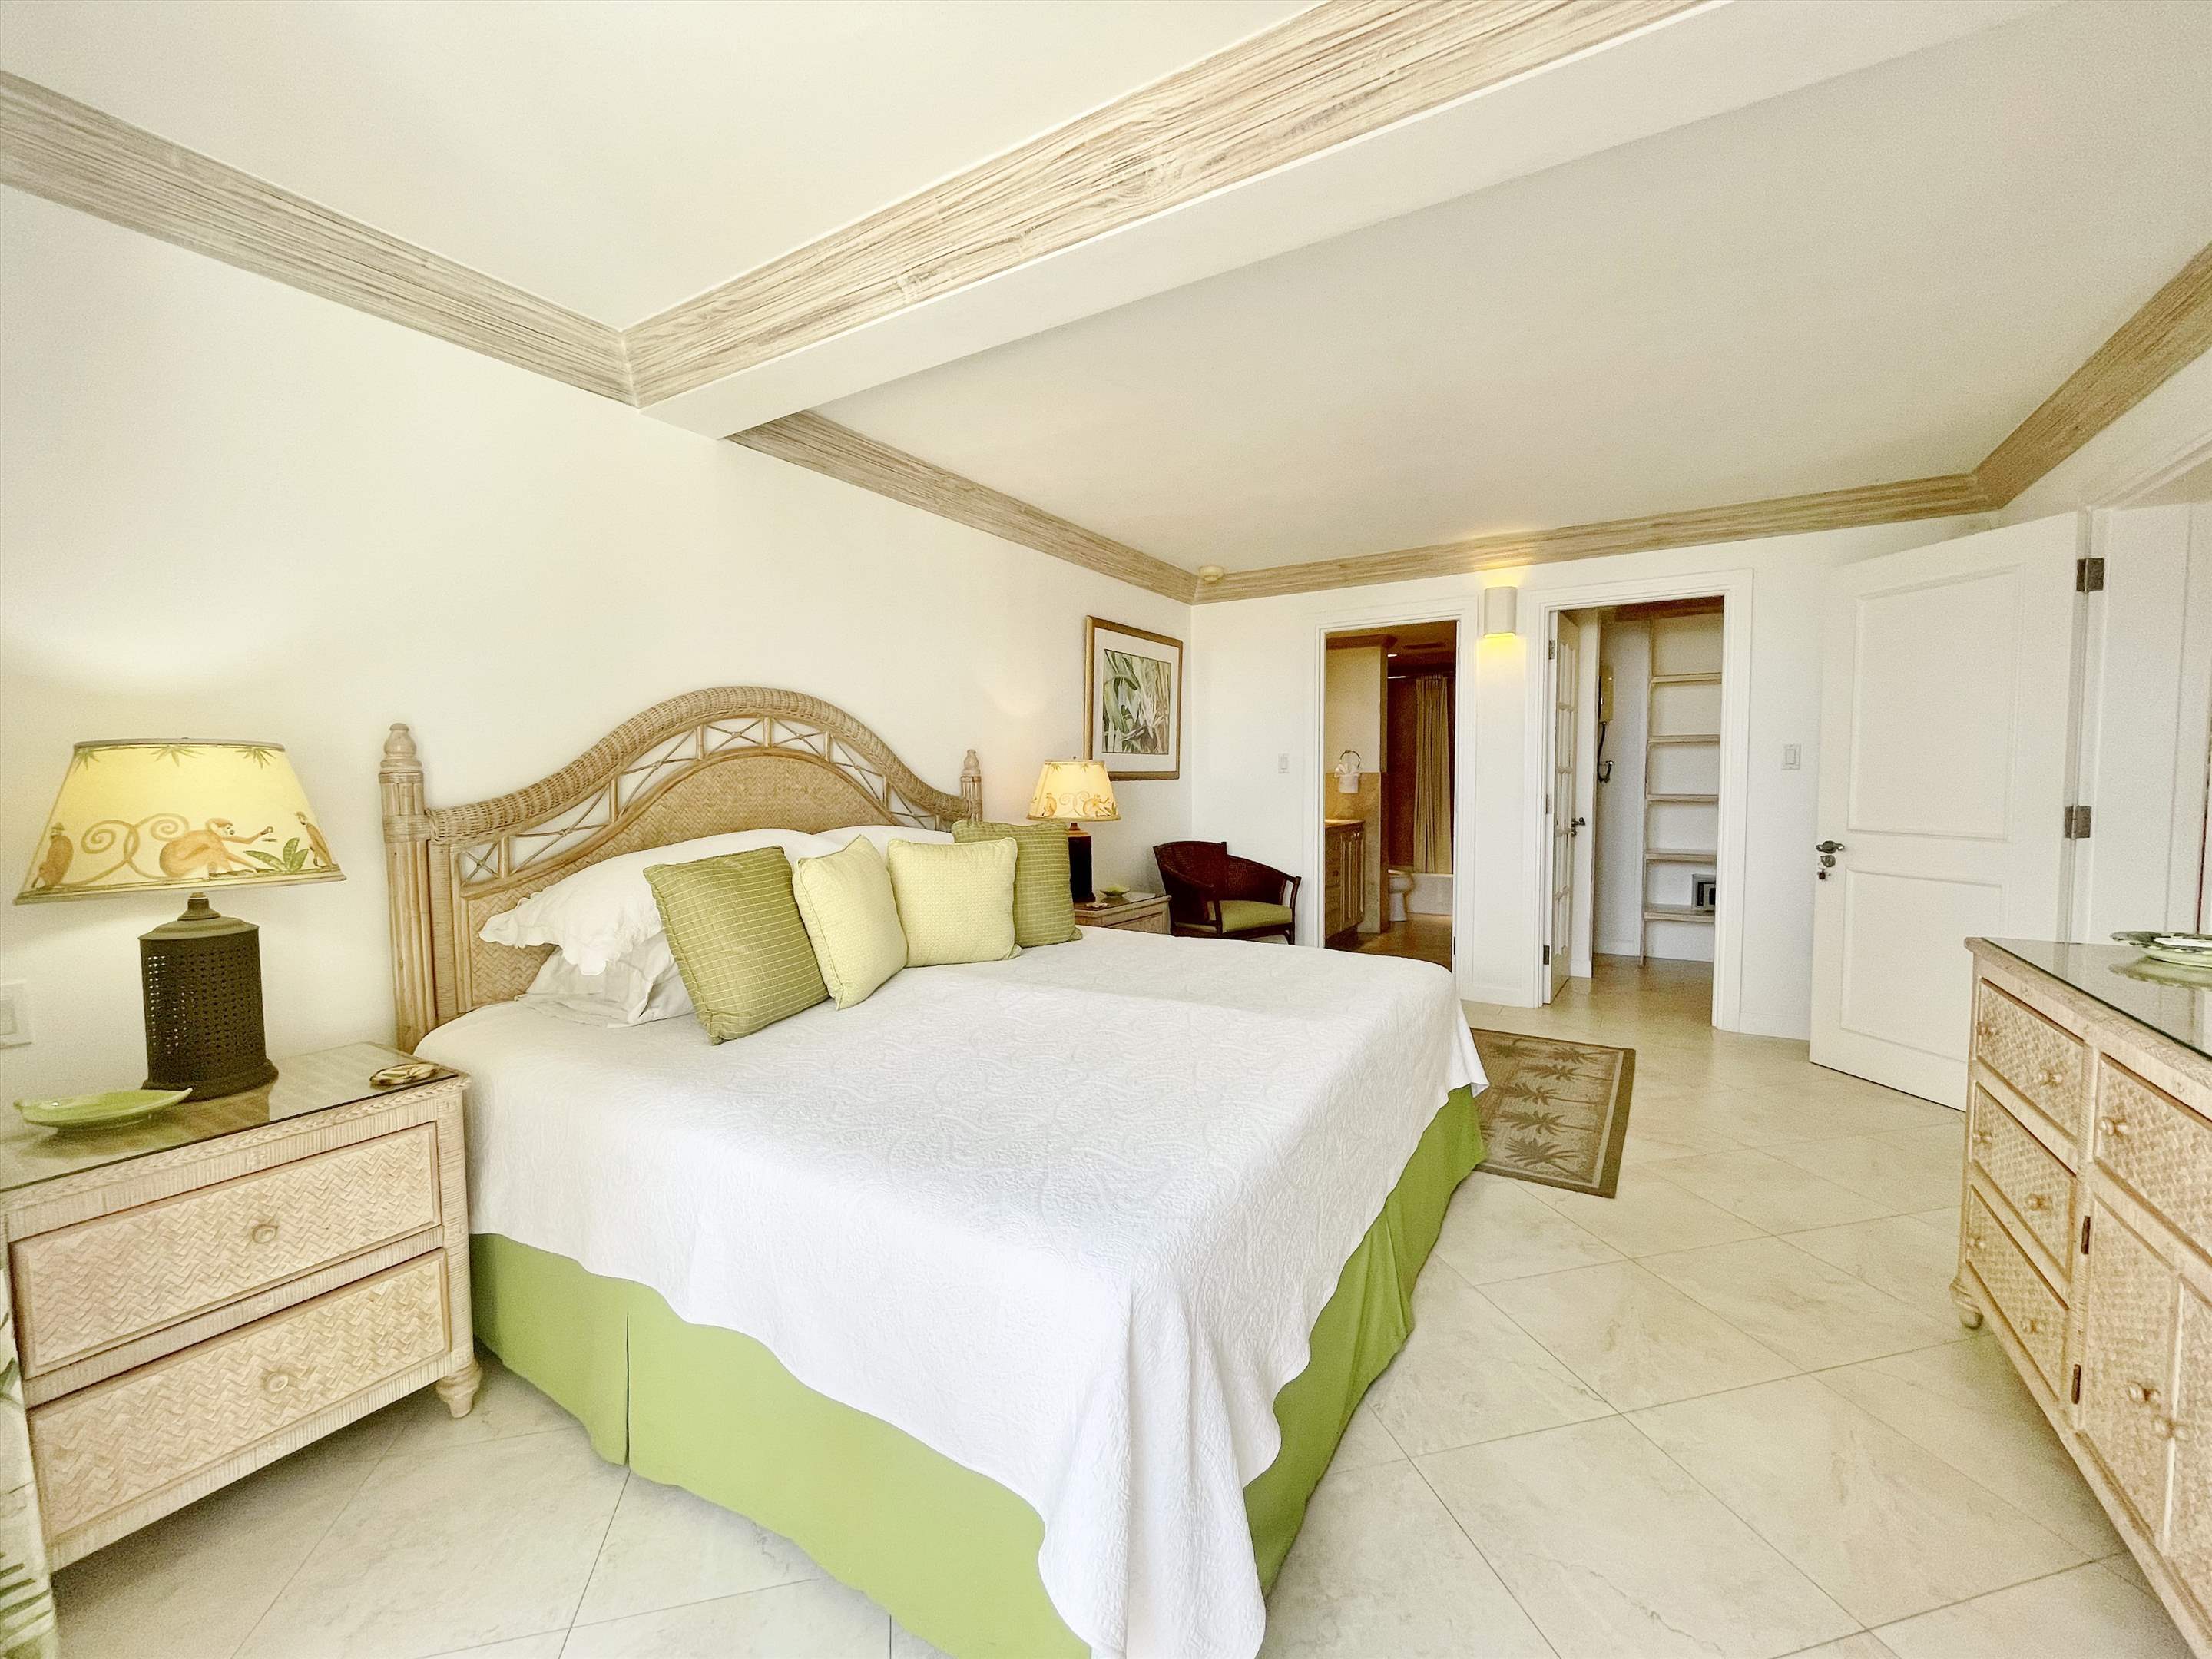 Villas on the Beach 101, 1 bedroom, 1 bedroom apartment in St. James & West Coast, Barbados Photo #13